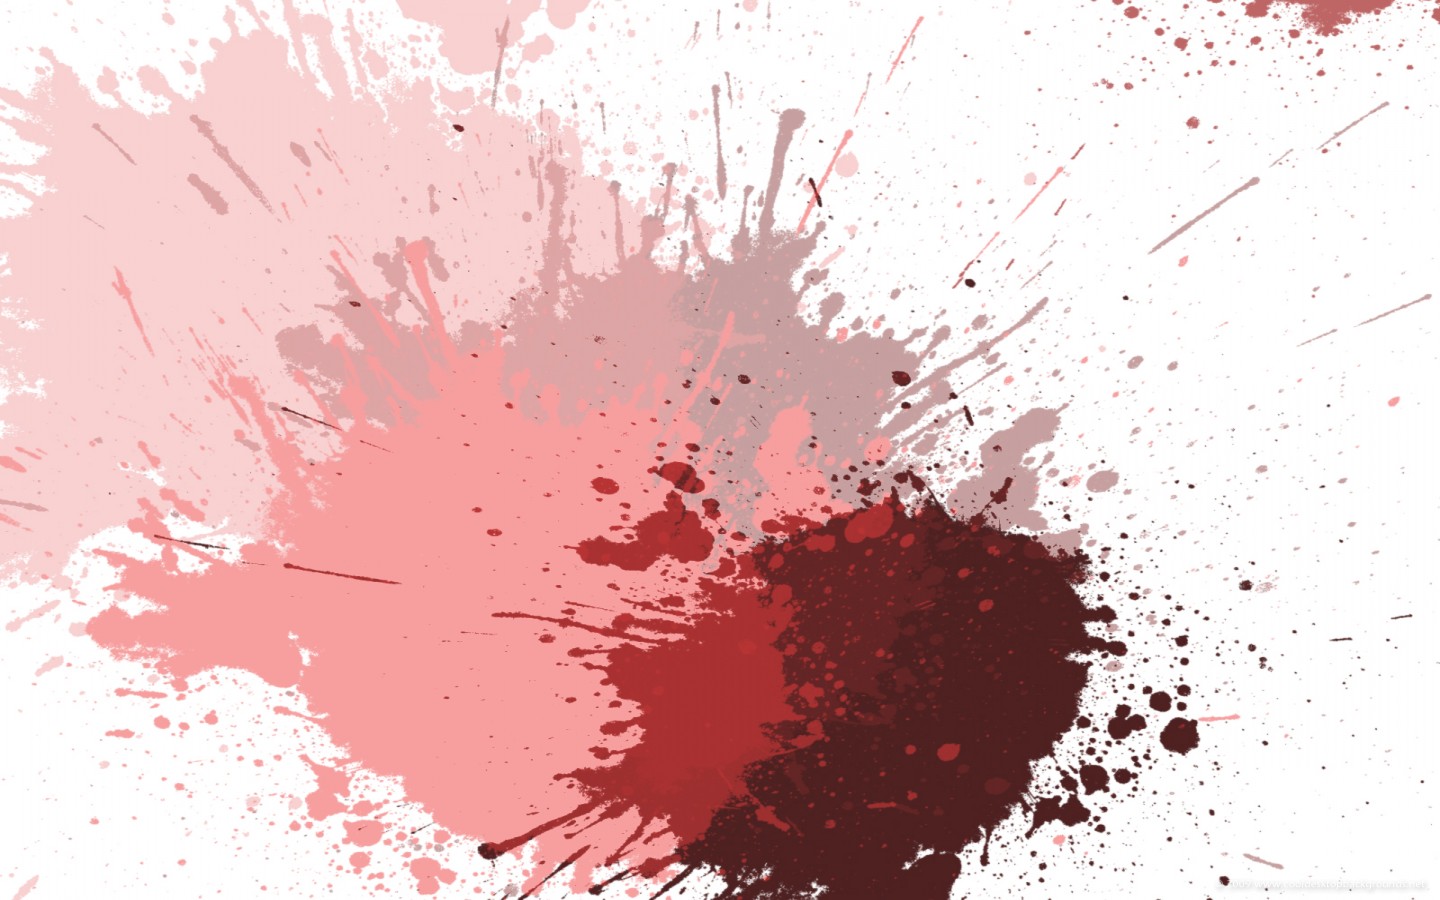 Blood Splatters Image